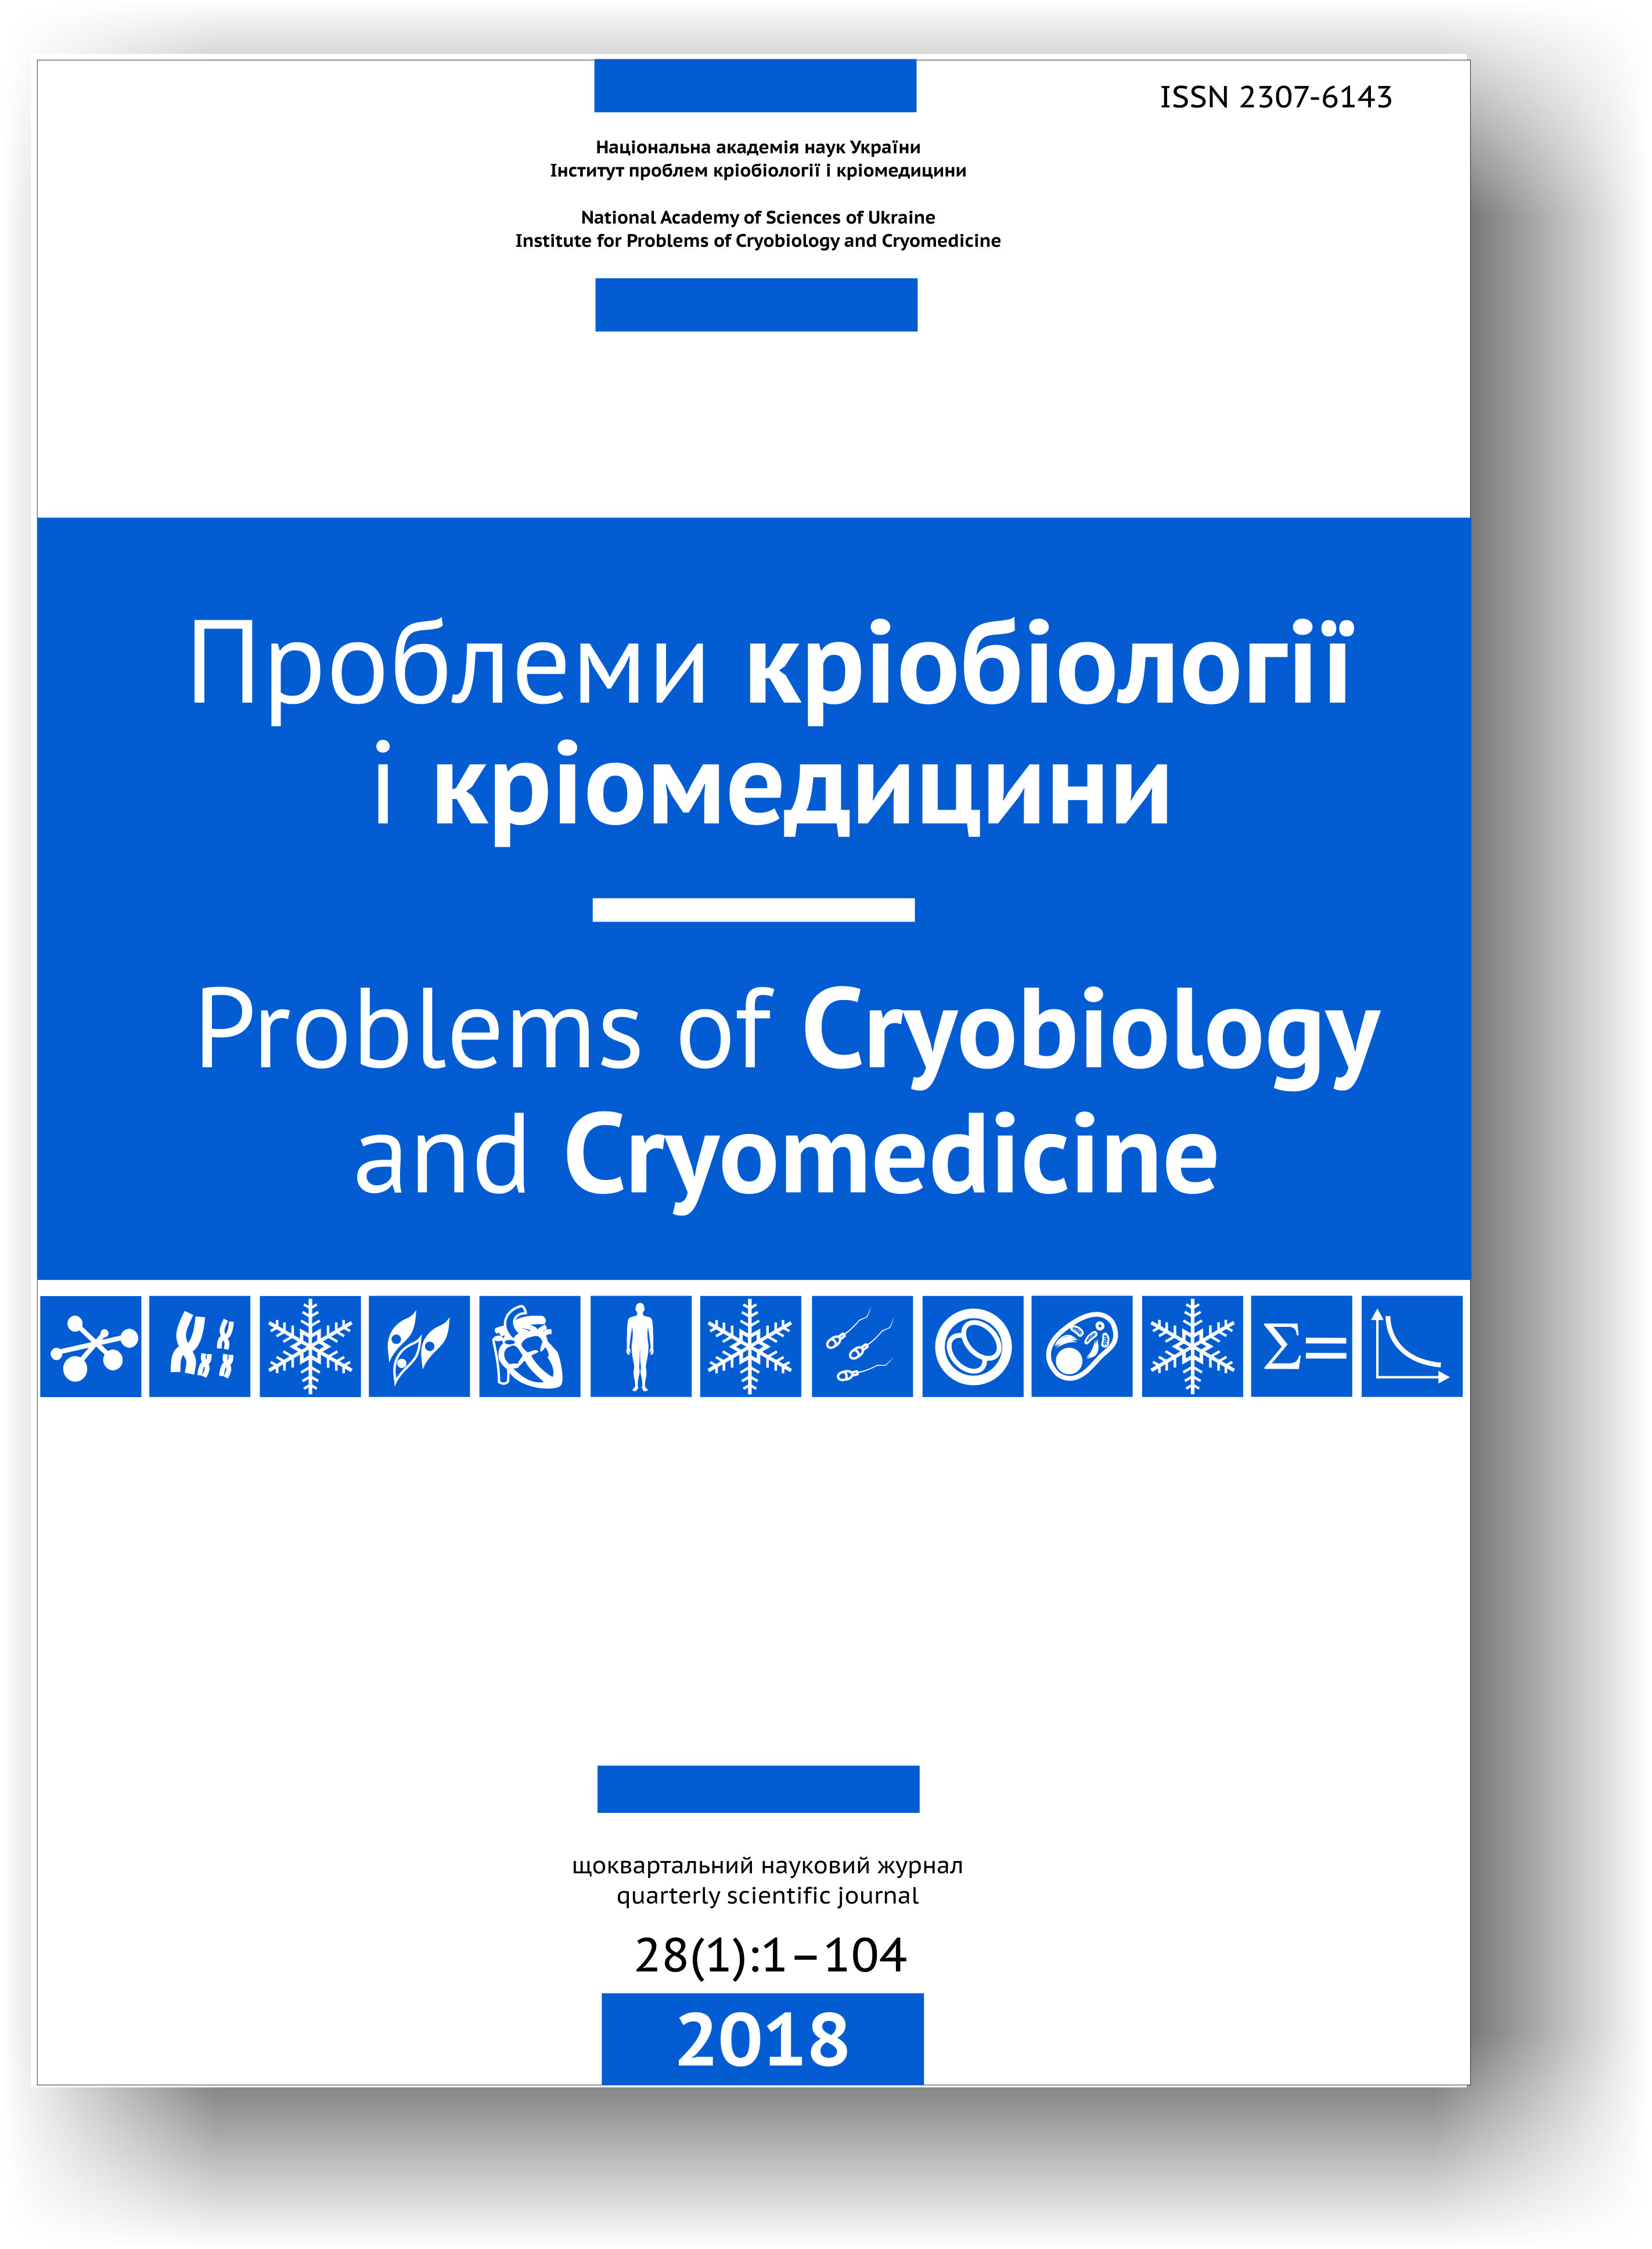 					View Vol. 28 No. 1 (2018): Probl Cryobiol Cryomed
				